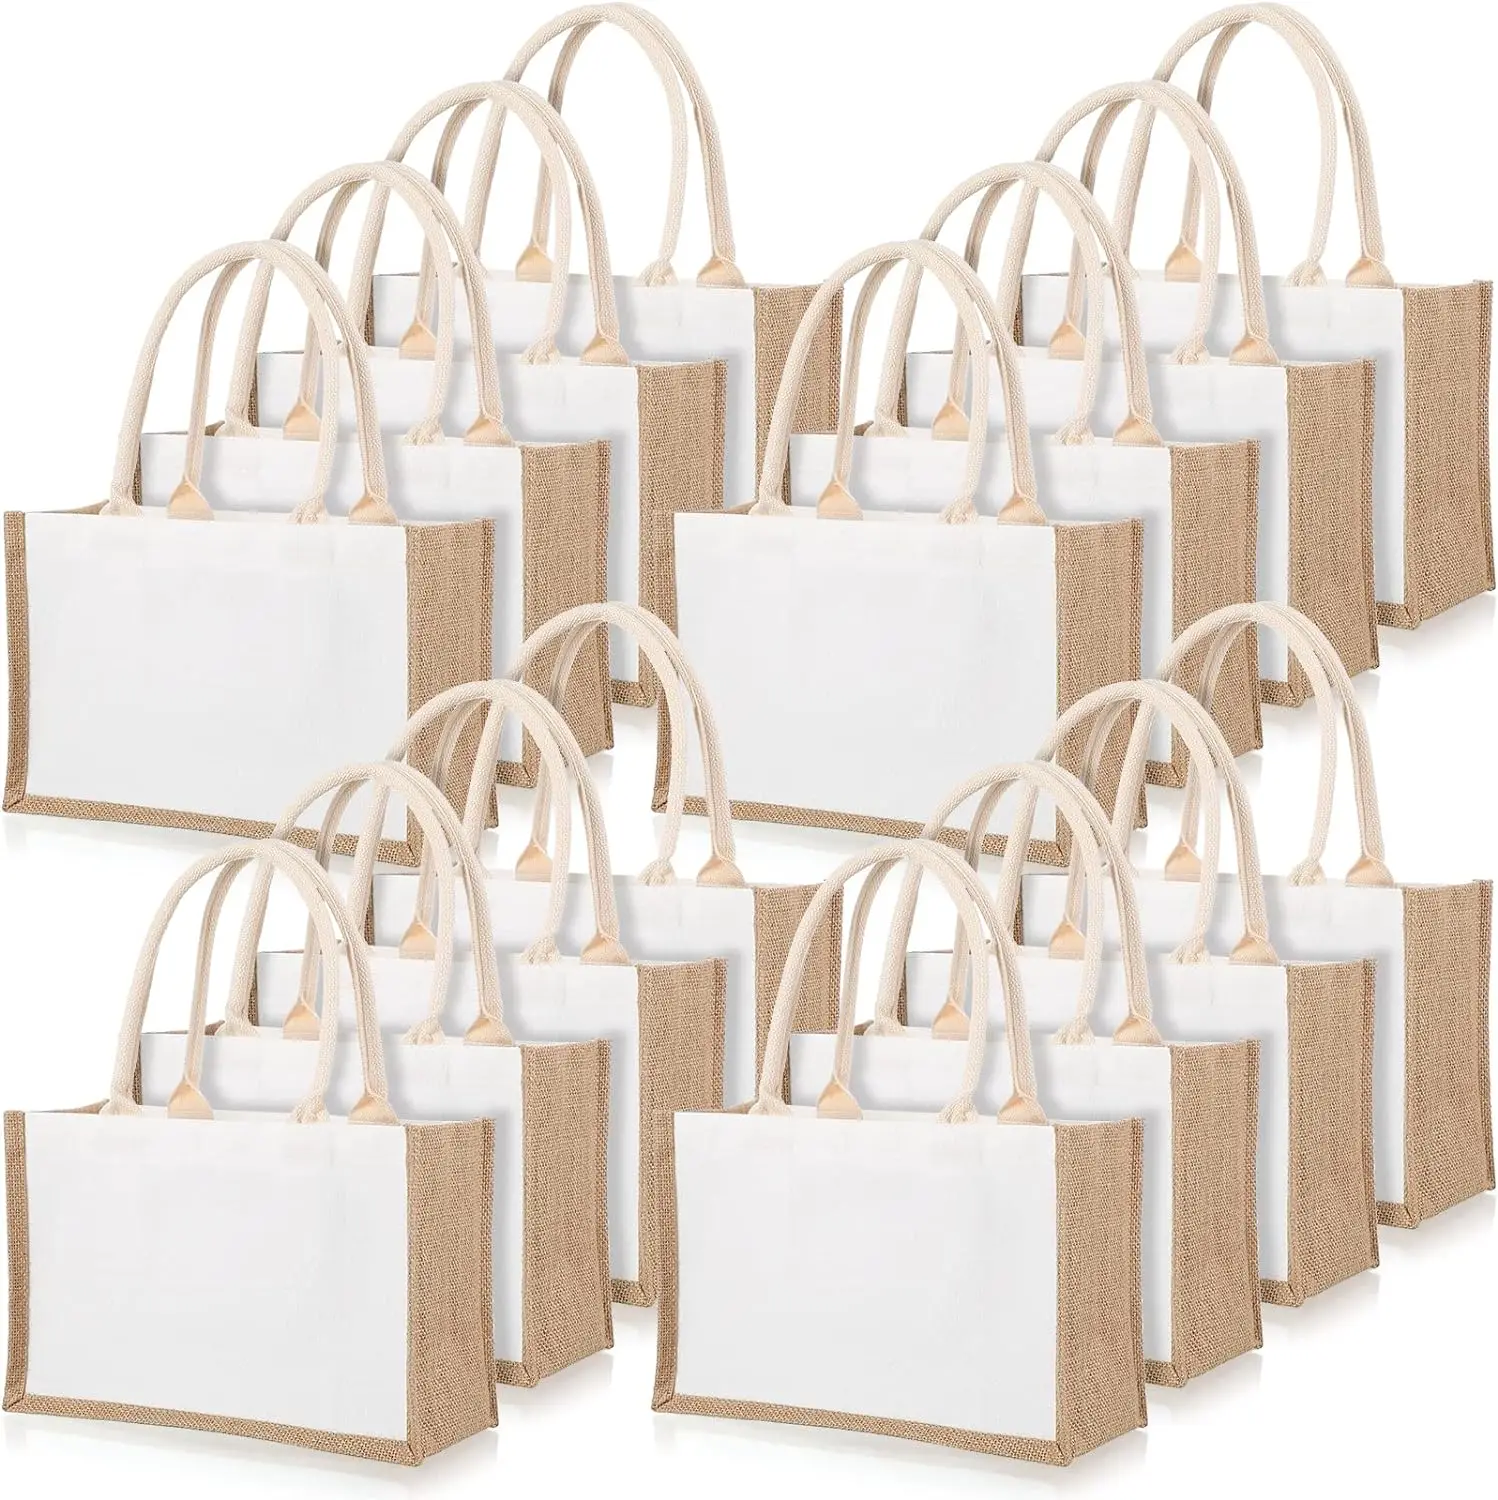 

Pack Burlap Tote Bags Jute Tote Bags with Handles Reusable Blank Canvas Grocery Bag for Women Bridesmaid Wedding Gift DIY Beach